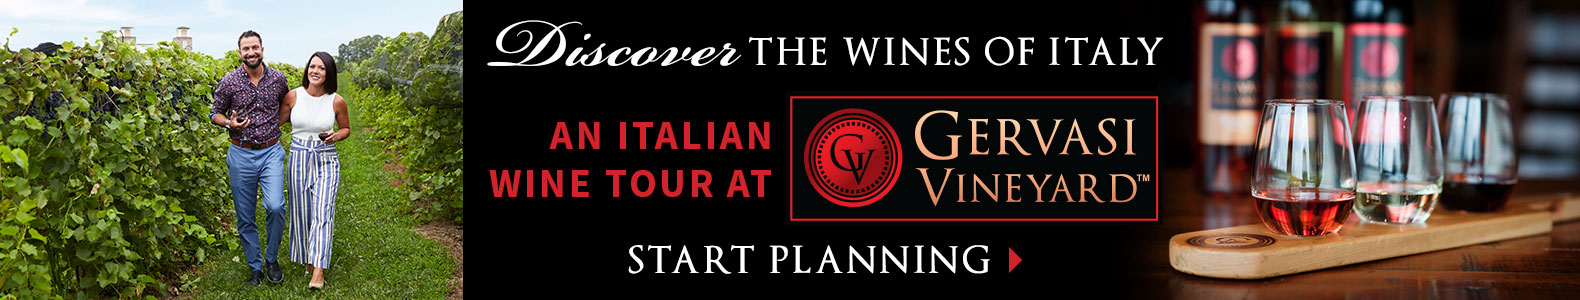 GV-Italian-Wine-Tour-1580x300